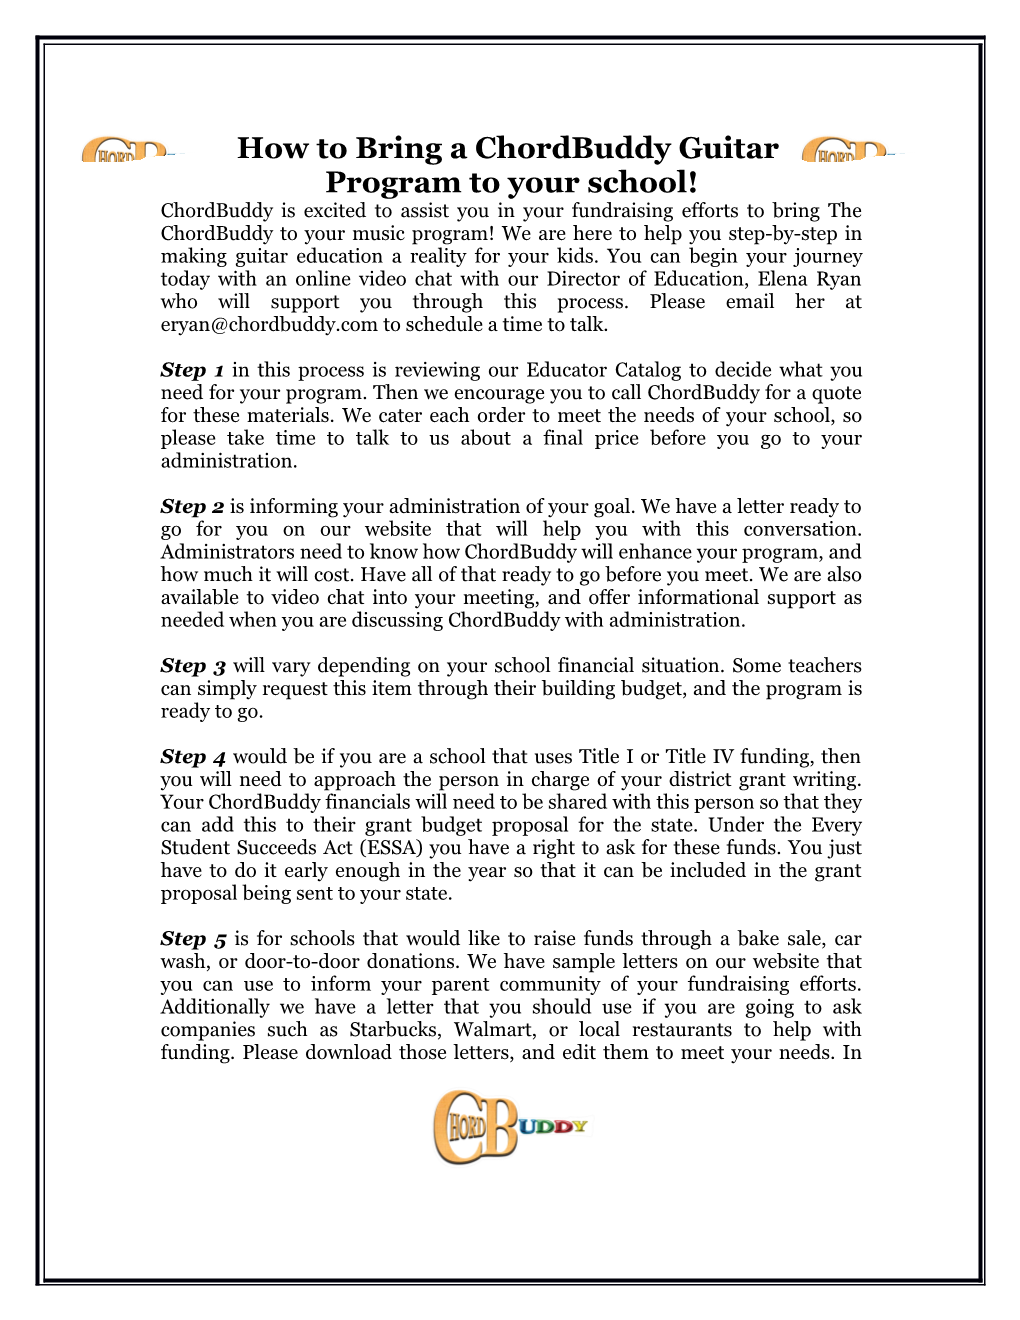 Program to Your School!